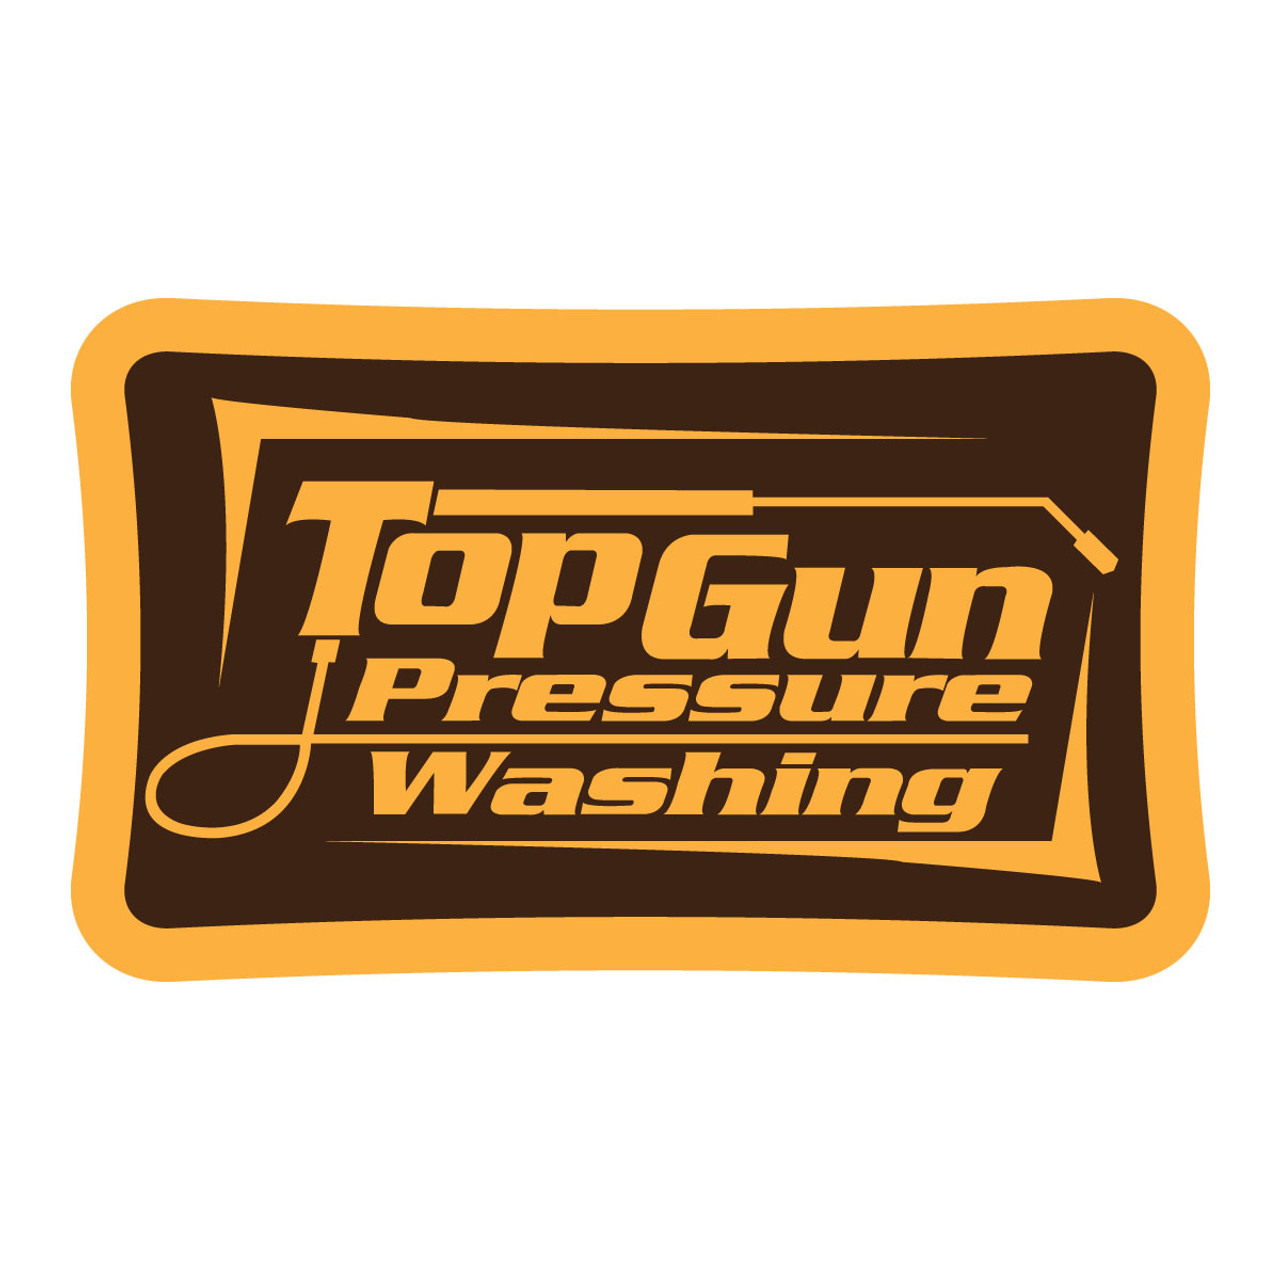 Top Gun Pressure Washing Buckle (RESTRICTED)